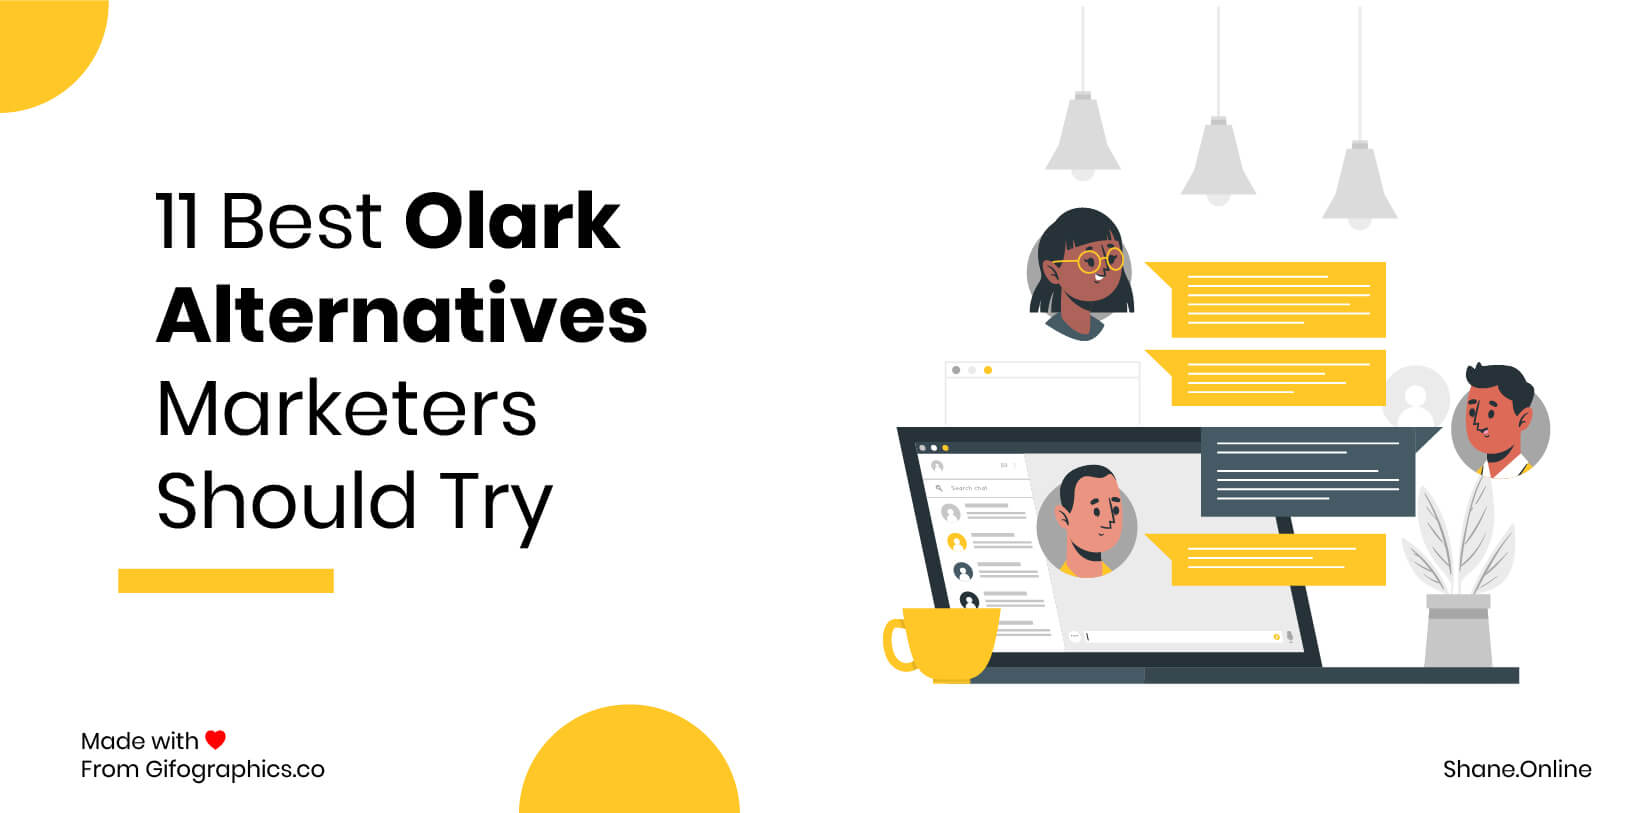 11 Best Olark Alternatives Marketers Should Try